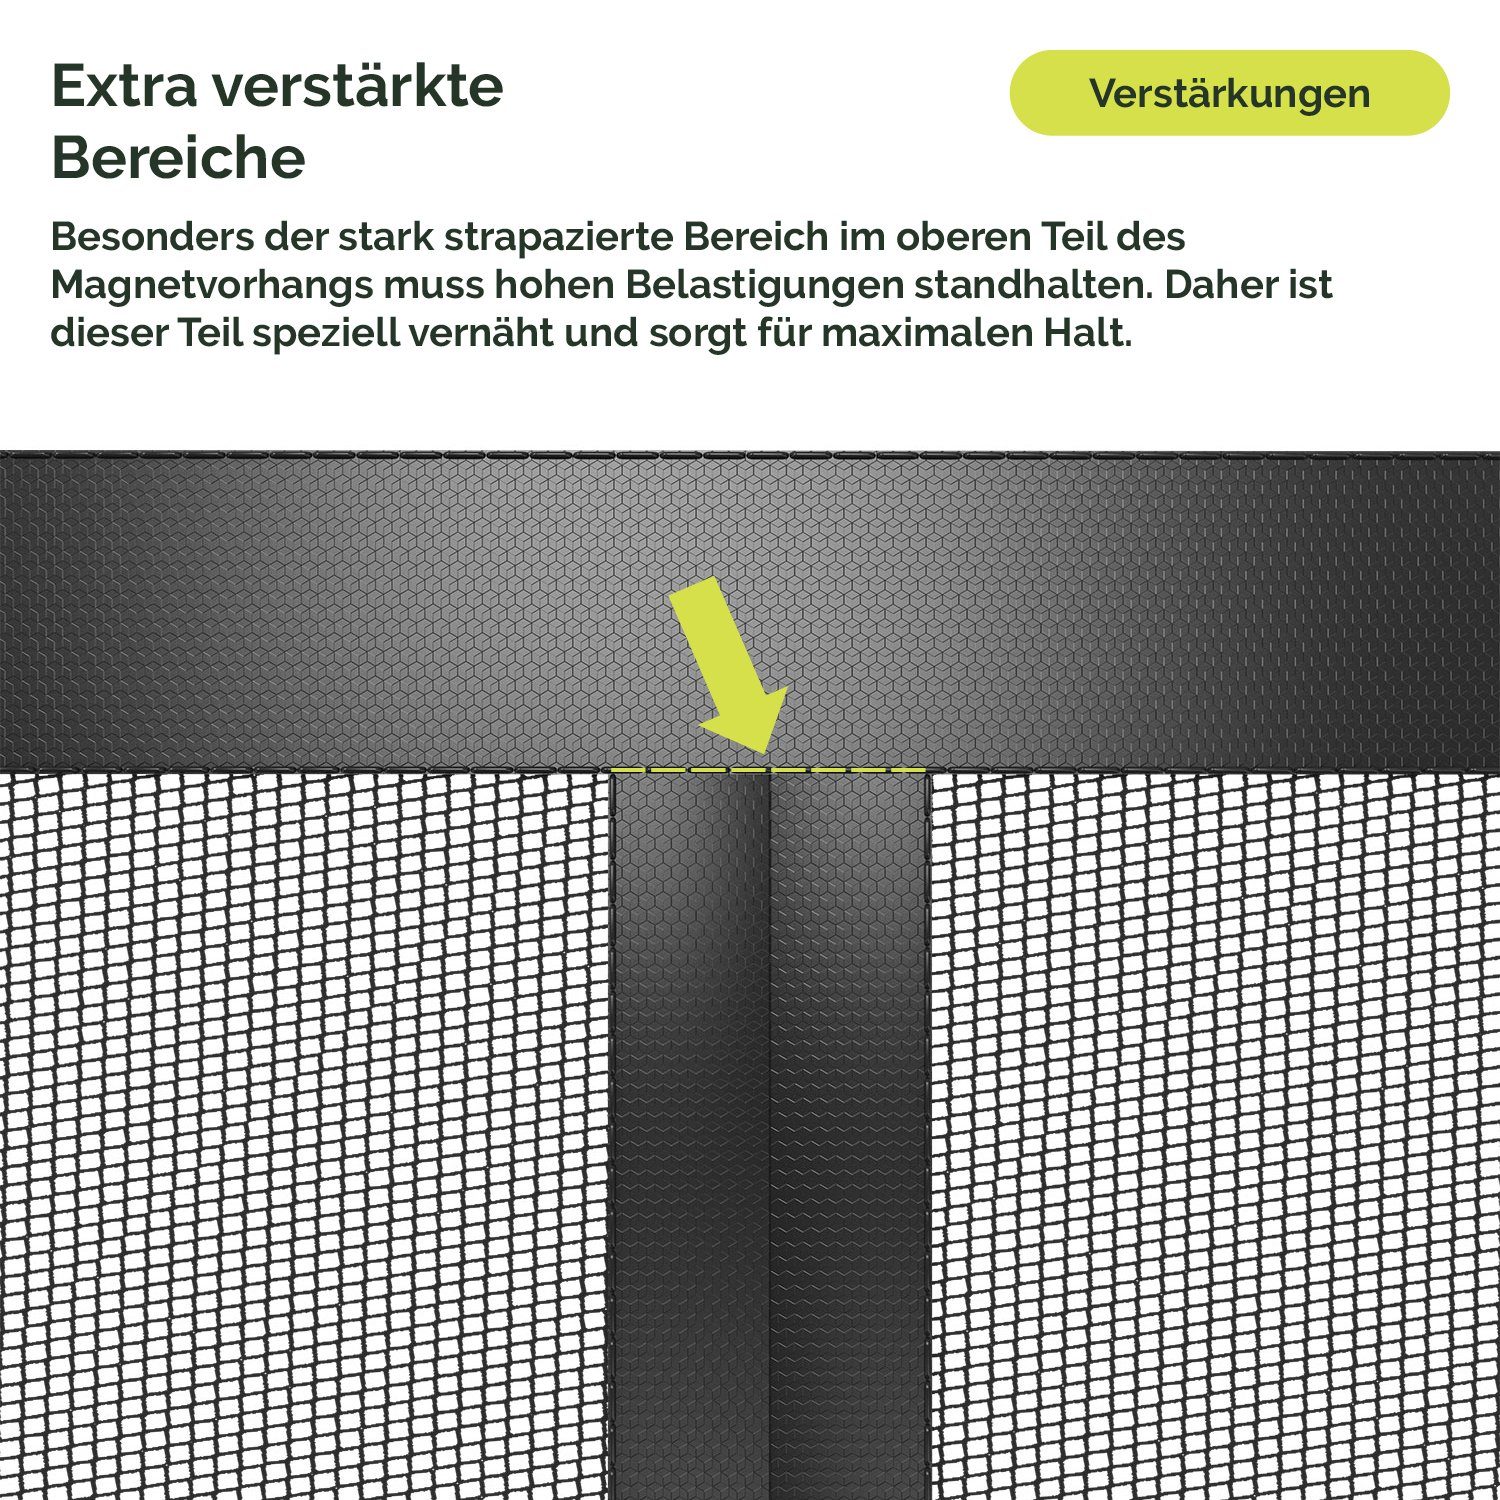 Fliegengitter Balkontür Magnet Insektenschutz-Vorhang Insektenschutz Nematek - Tür Magnetvorhang